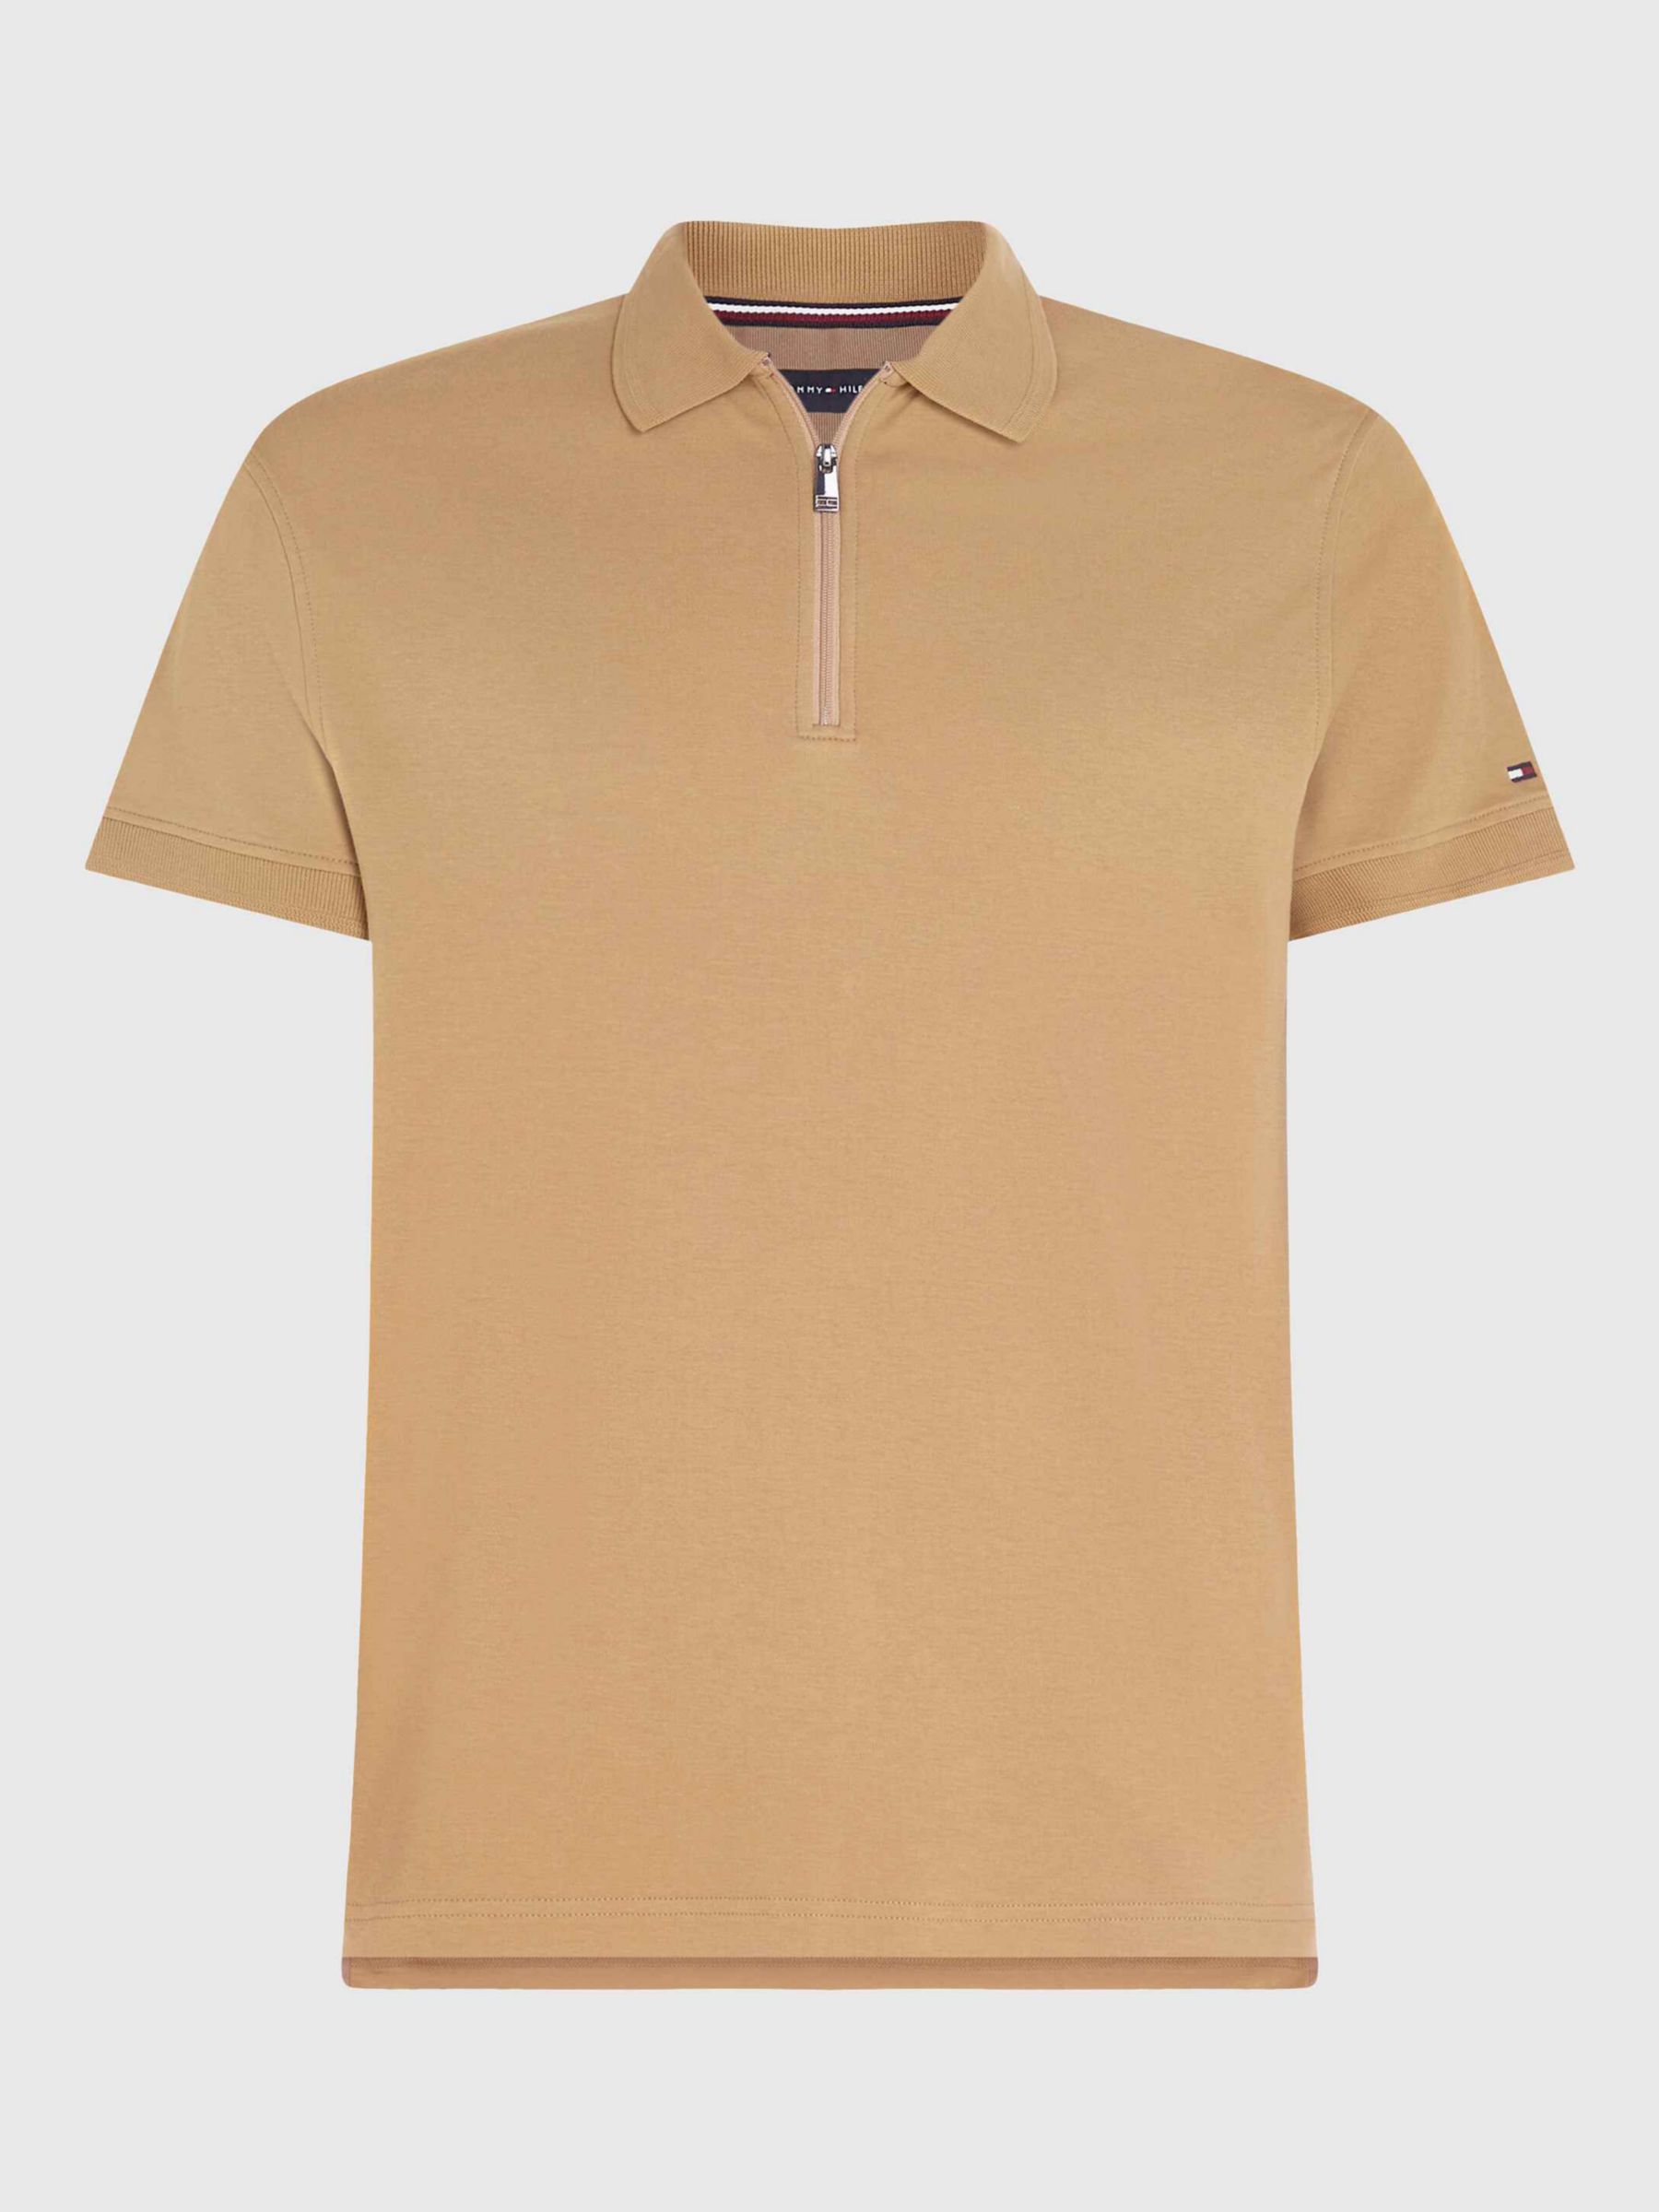 Tommy Hilfiger Zip Neck Slim Fit Polo Shirt, Countryside Khaki, XS